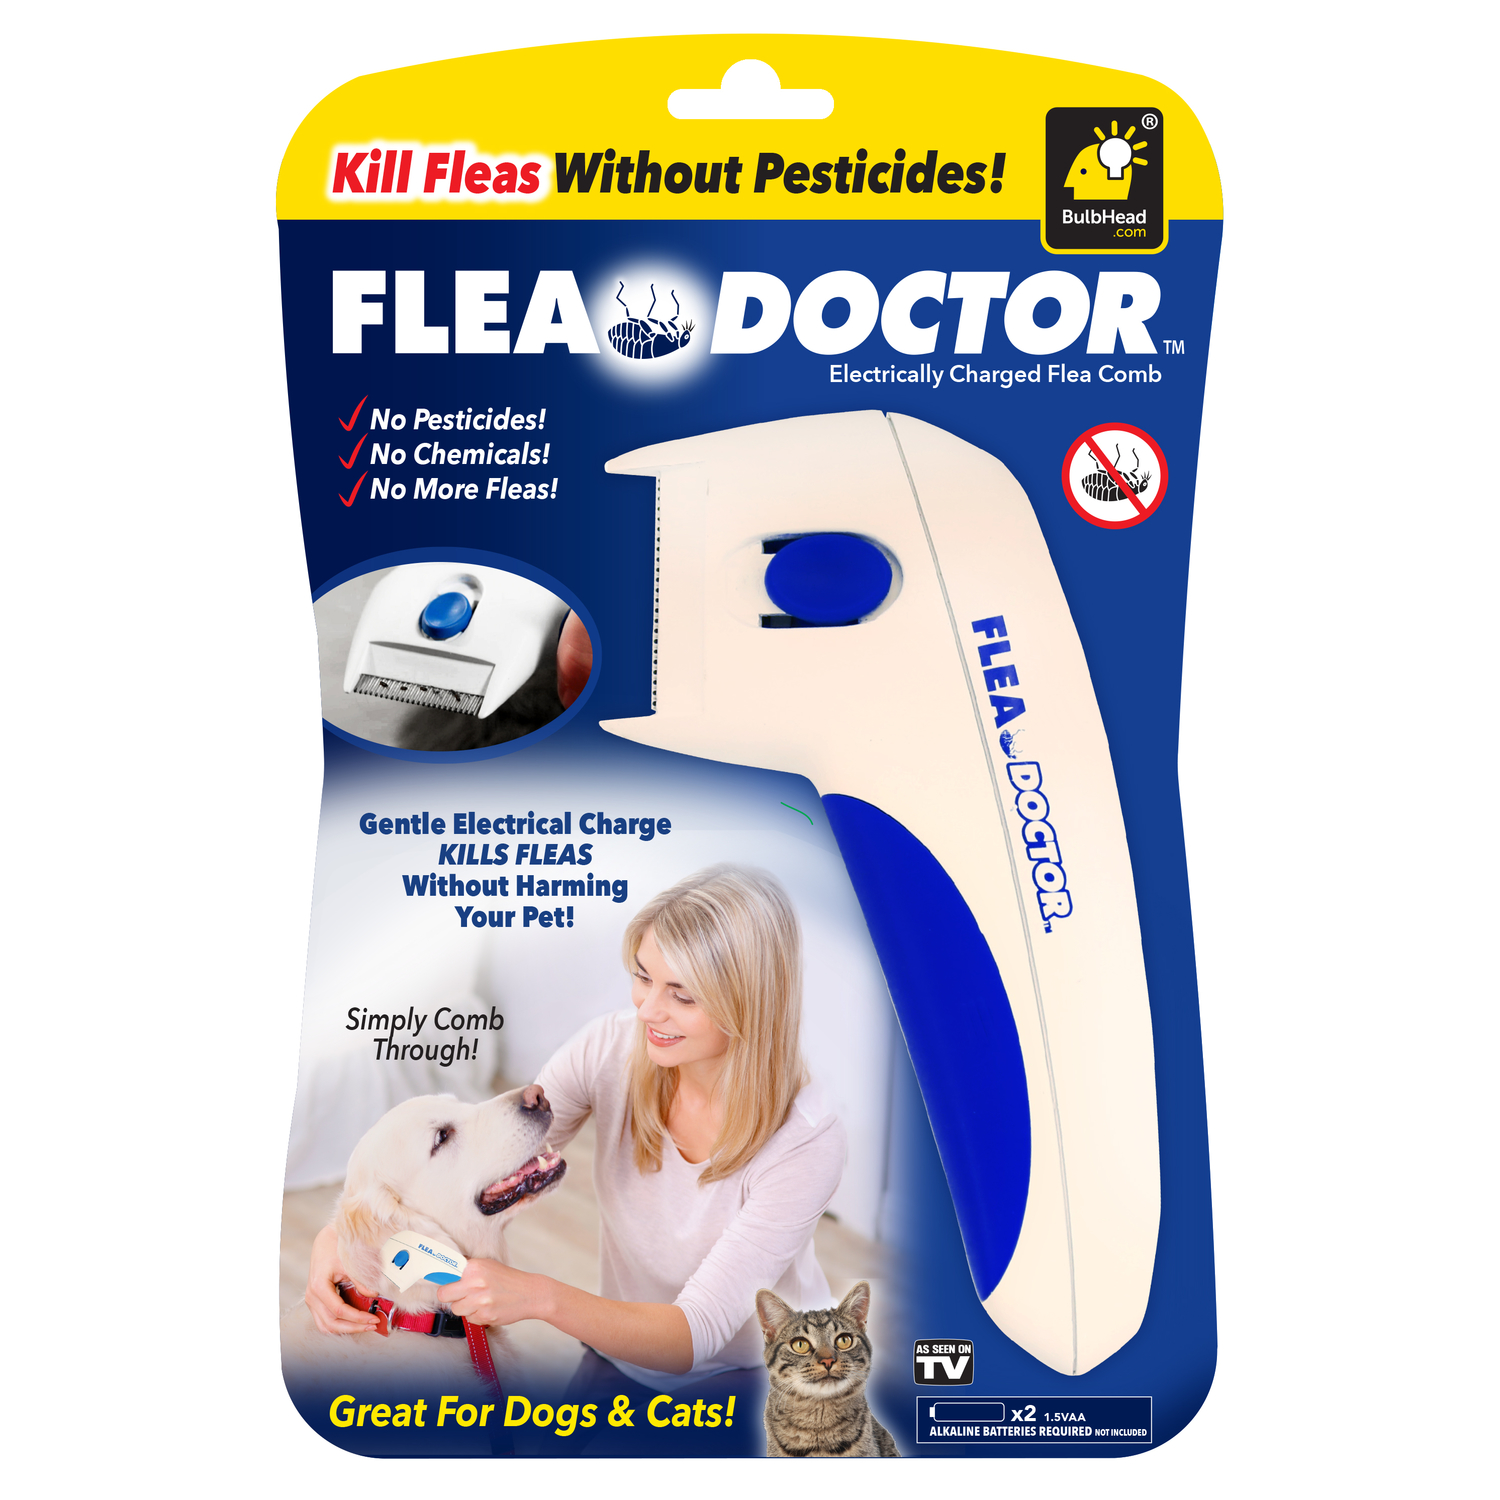 flea doctor comb reviews